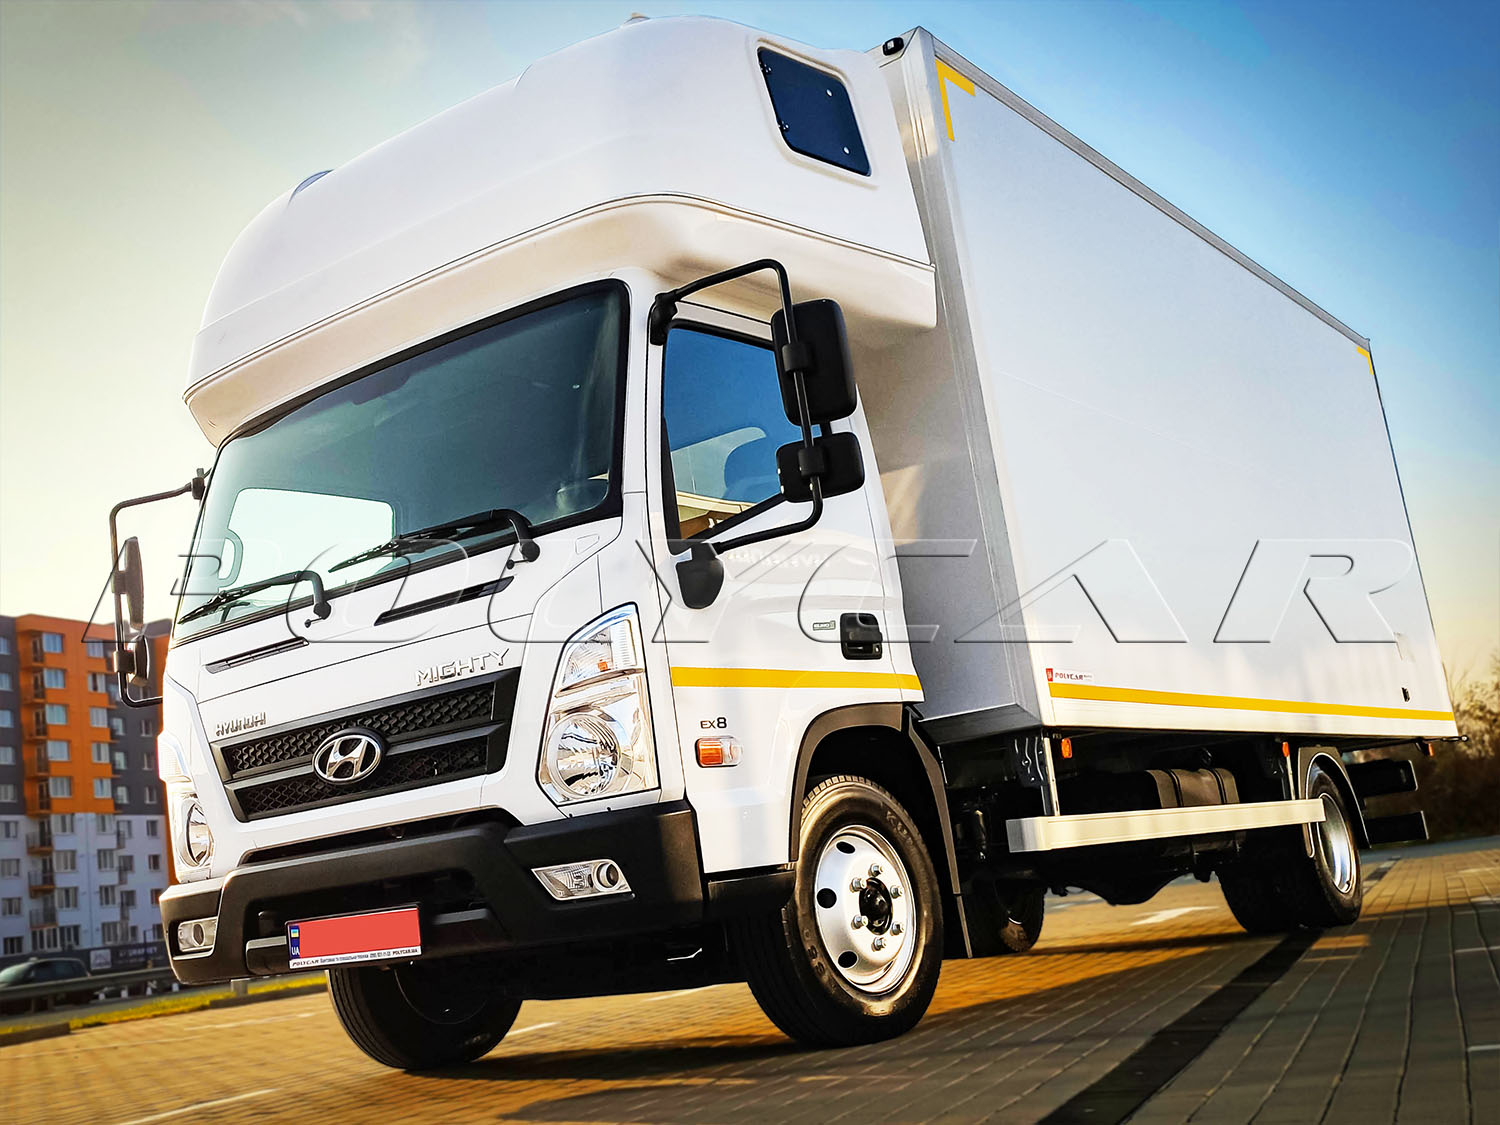 Завершено производство и передача клиенту партии фургонов на Hyundai EX8.